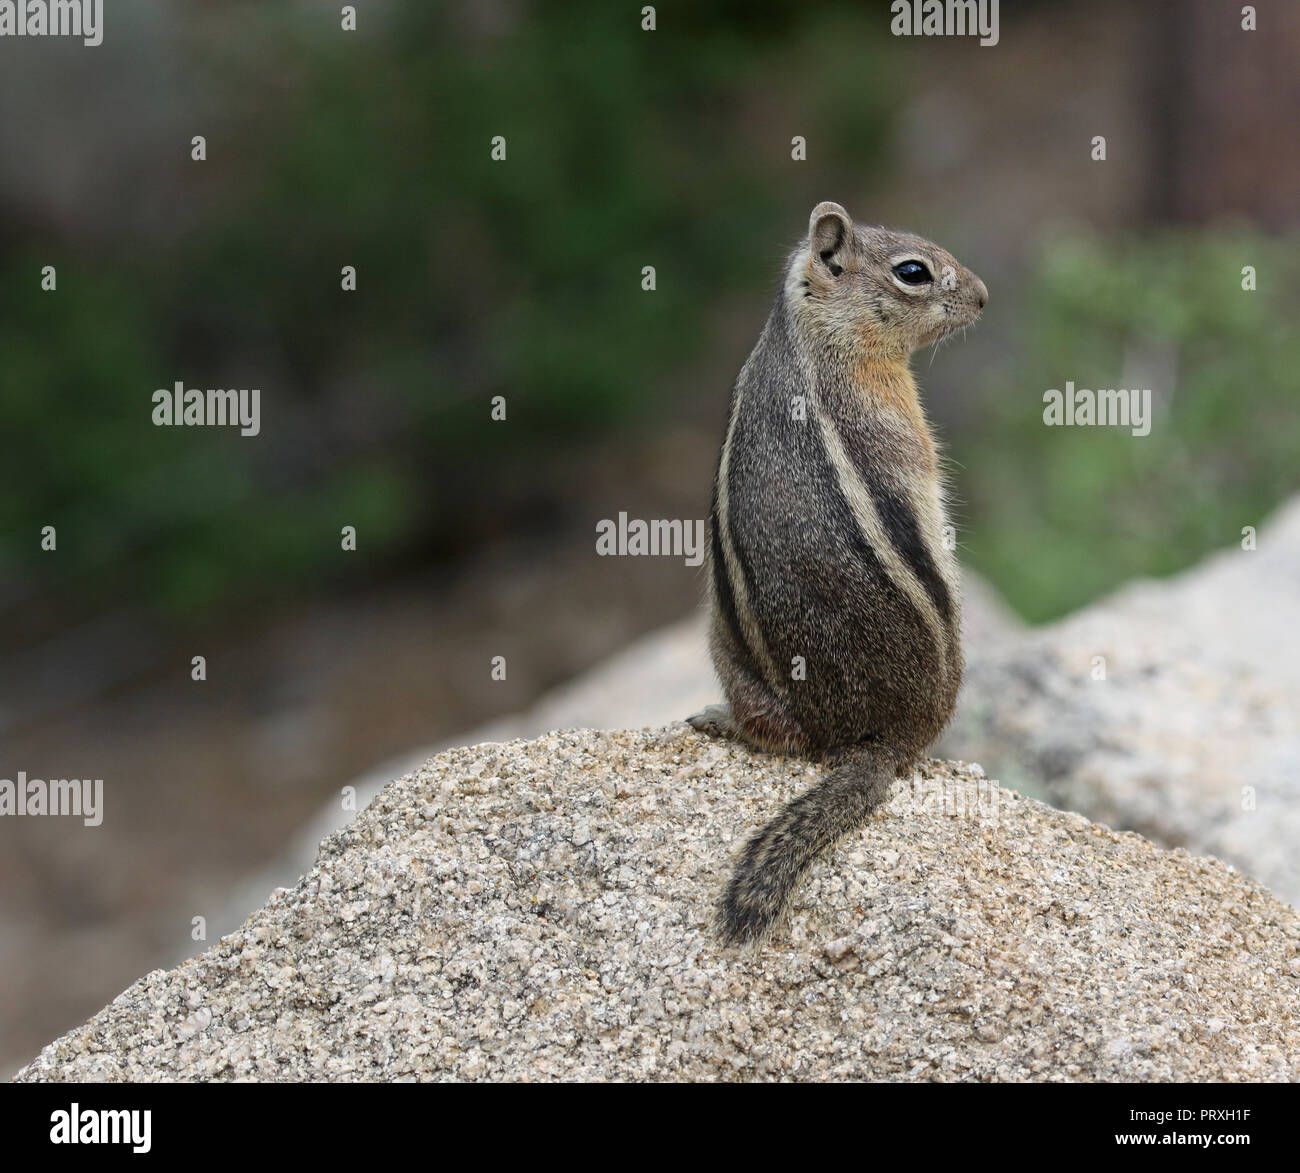 A Golden-mantled Ground Squirrel (Callospermophilus lateralis) standing on a rock.  Shot in Estes Park, Colorado, USA. Stock Photo